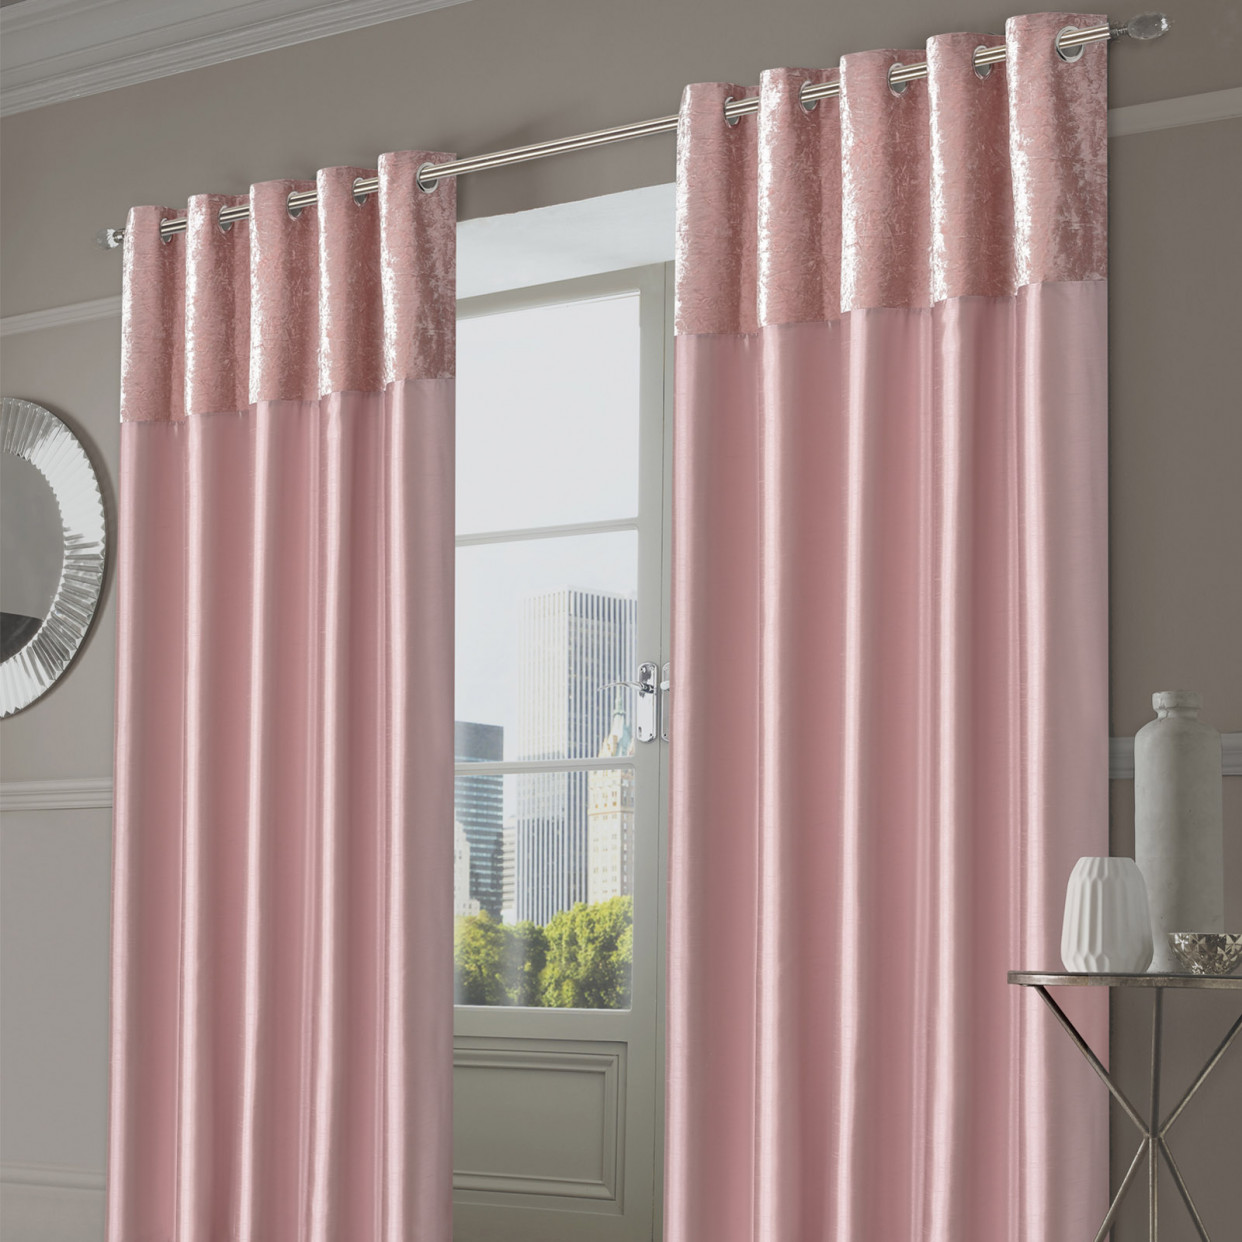 Sienna Home Manhattan Crushed Velvet Band Eyelet Curtains - Blush Pink, 90" x 72">